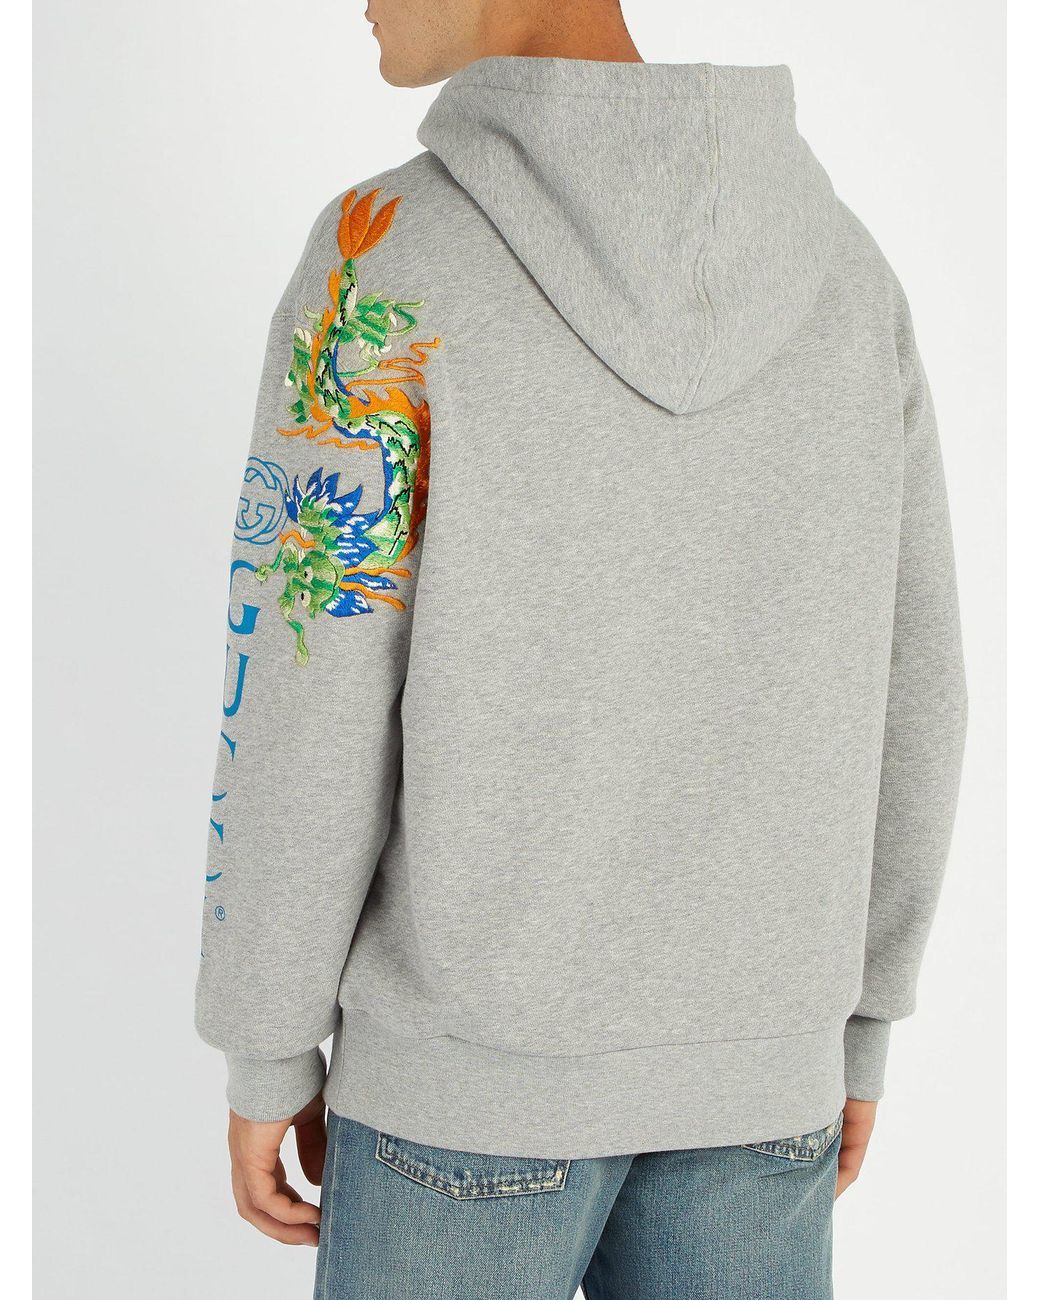 Gucci Dragon Logo Hooded Sweatshirt in Gray for Men | Lyst